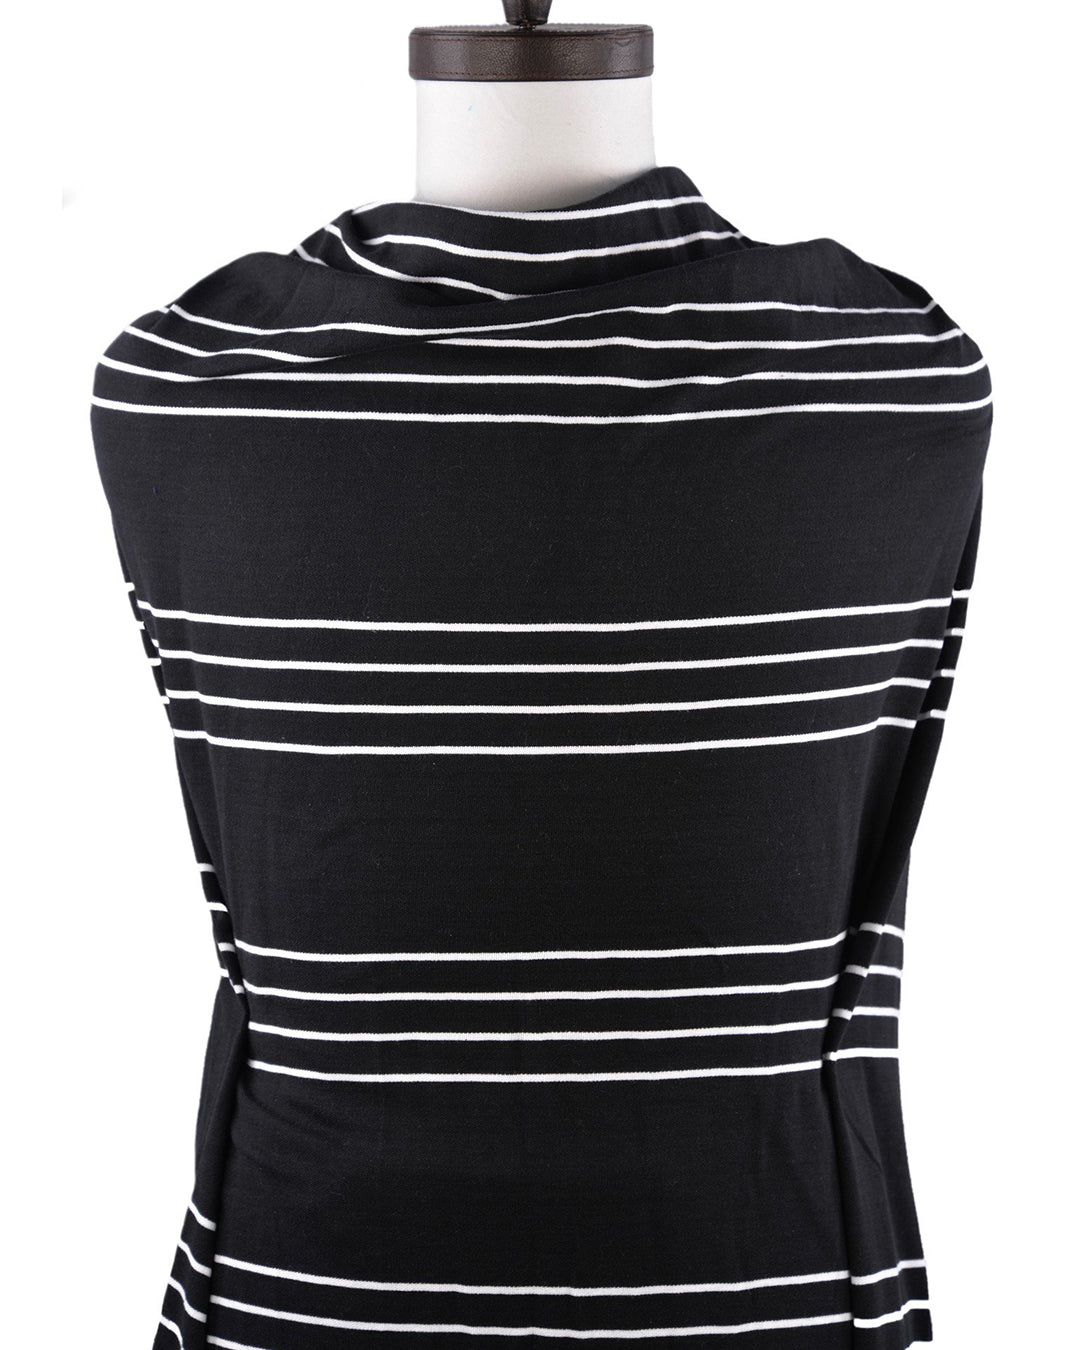 Black & White striped Polo T-shirt